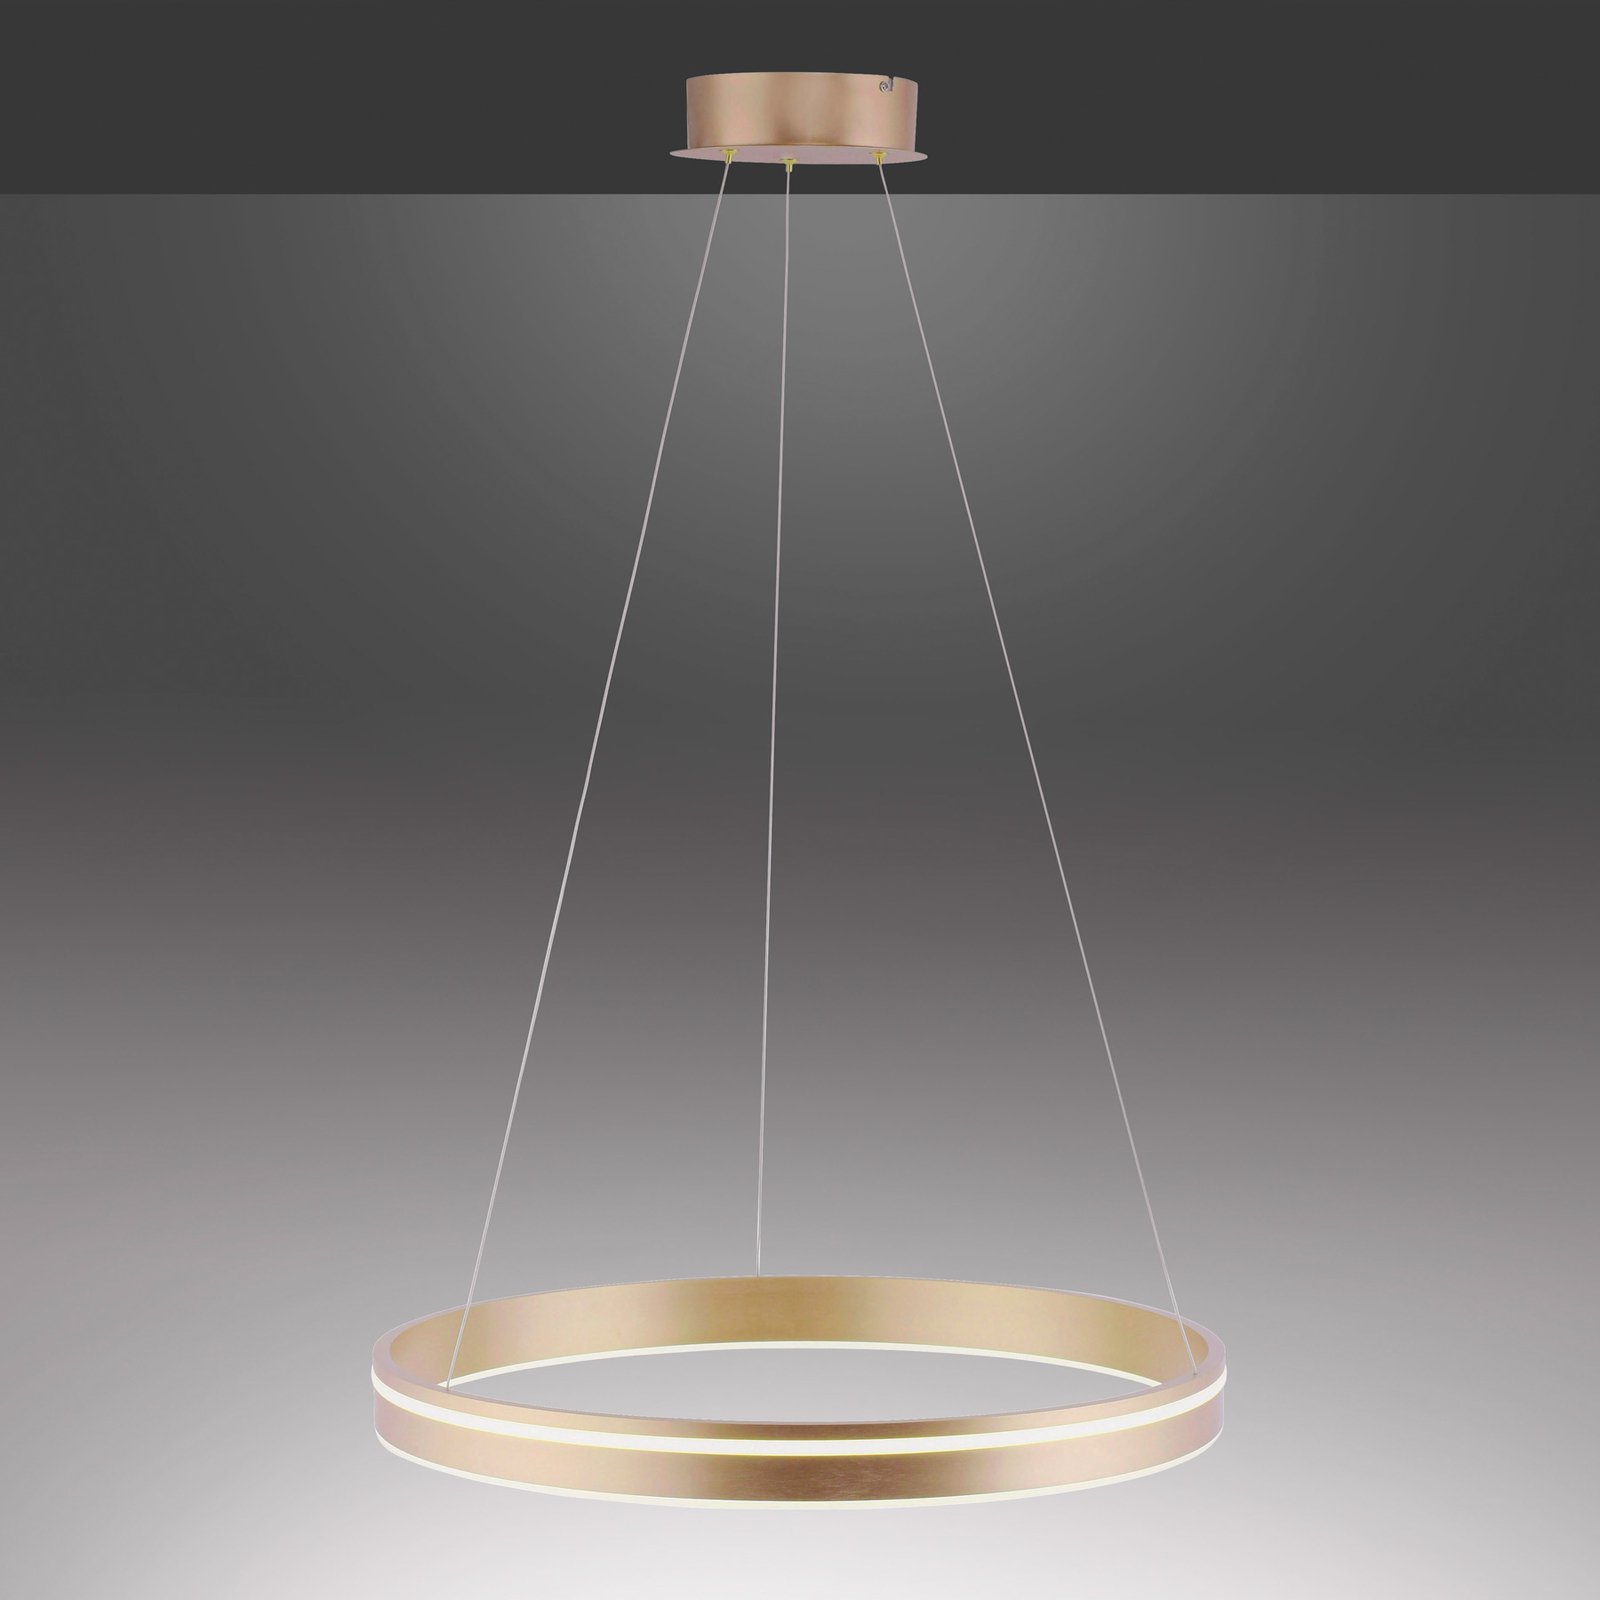 Paul Neuhaus Q-VITO LED hanglamp, 1 ring